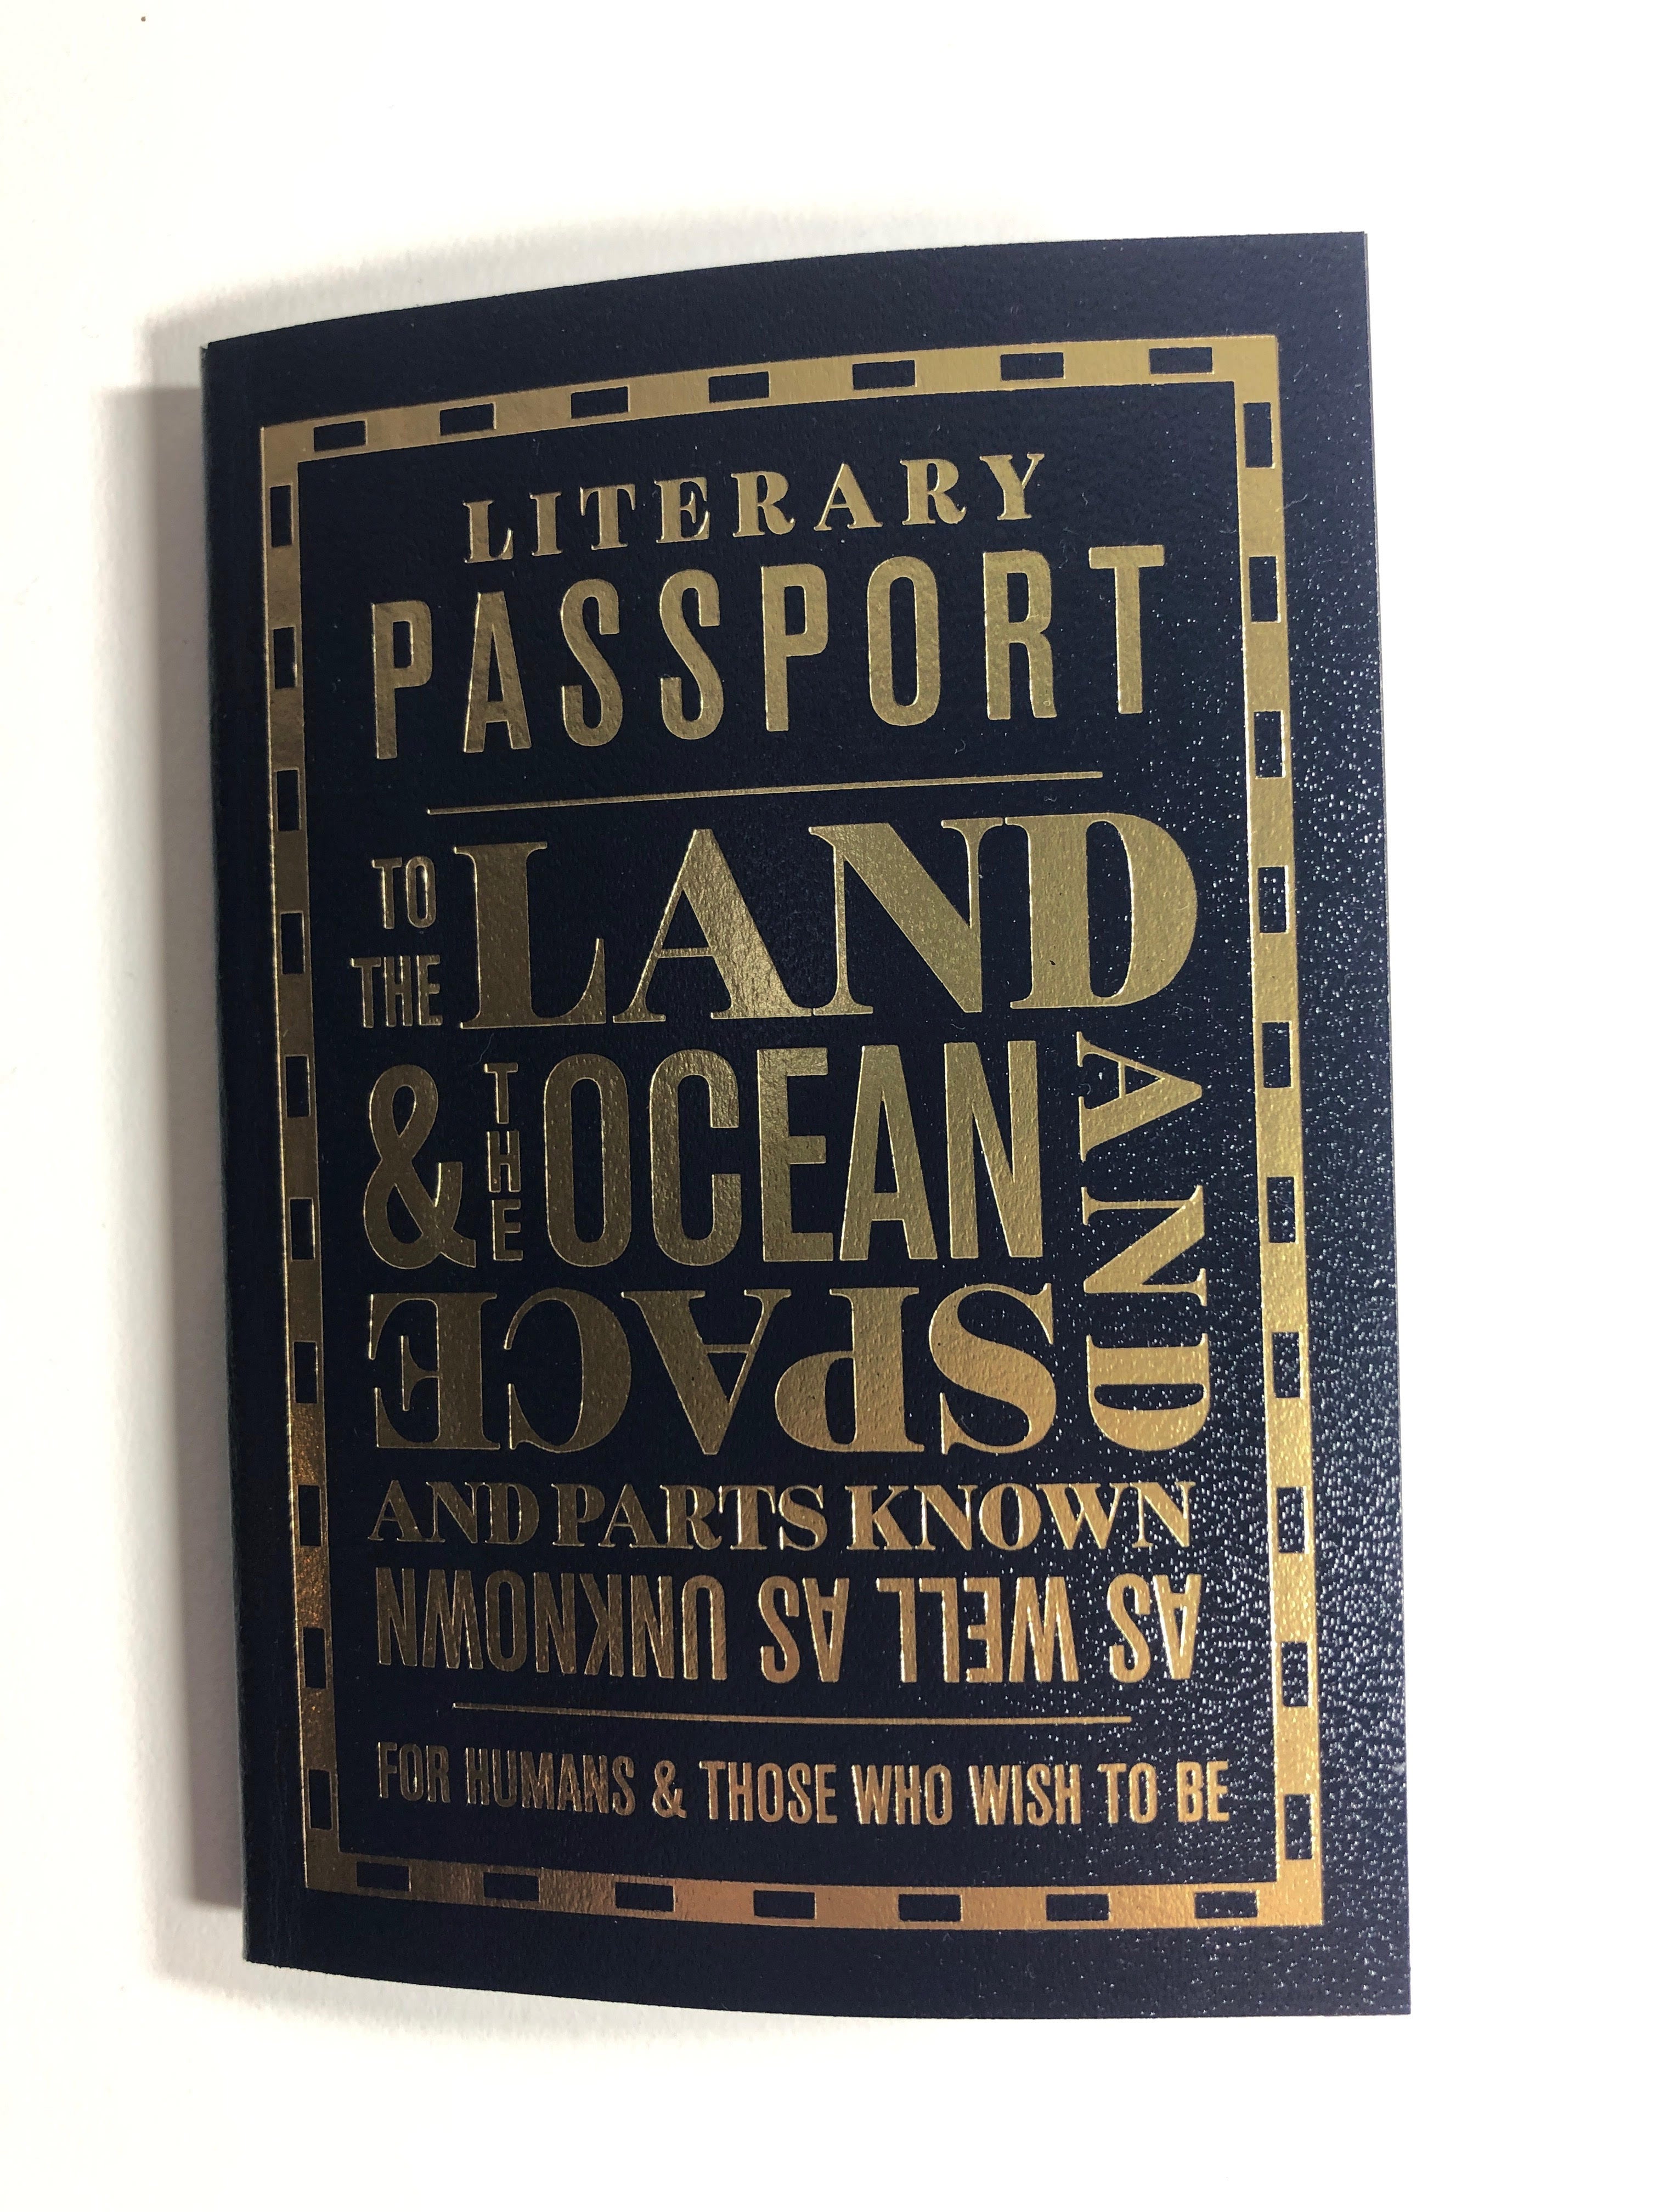 International Literary Passport